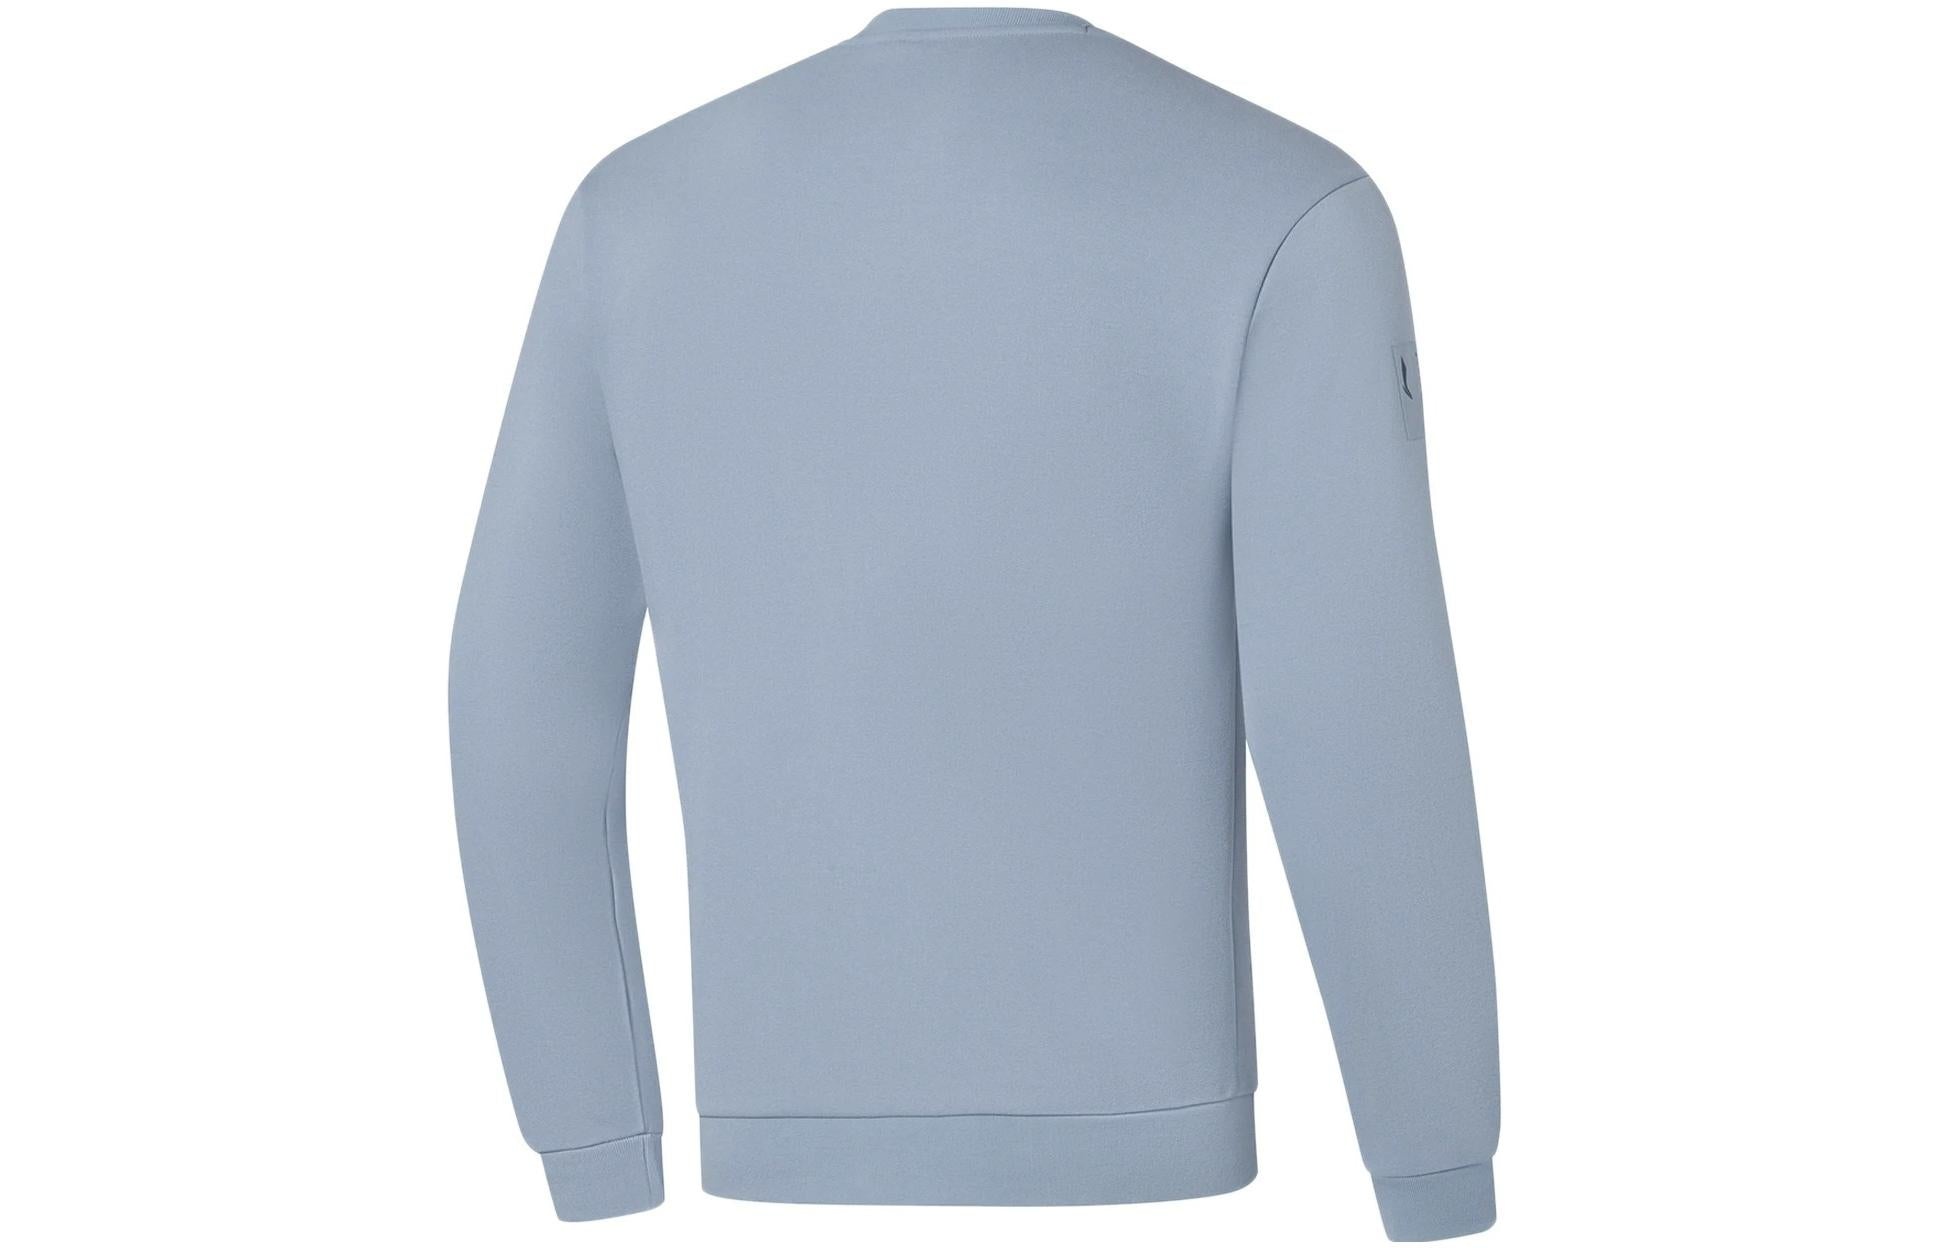 Li-Ning Casual Lifestyle Long Sleeve Pullover 'Blue' AWDSA49-5 - 2